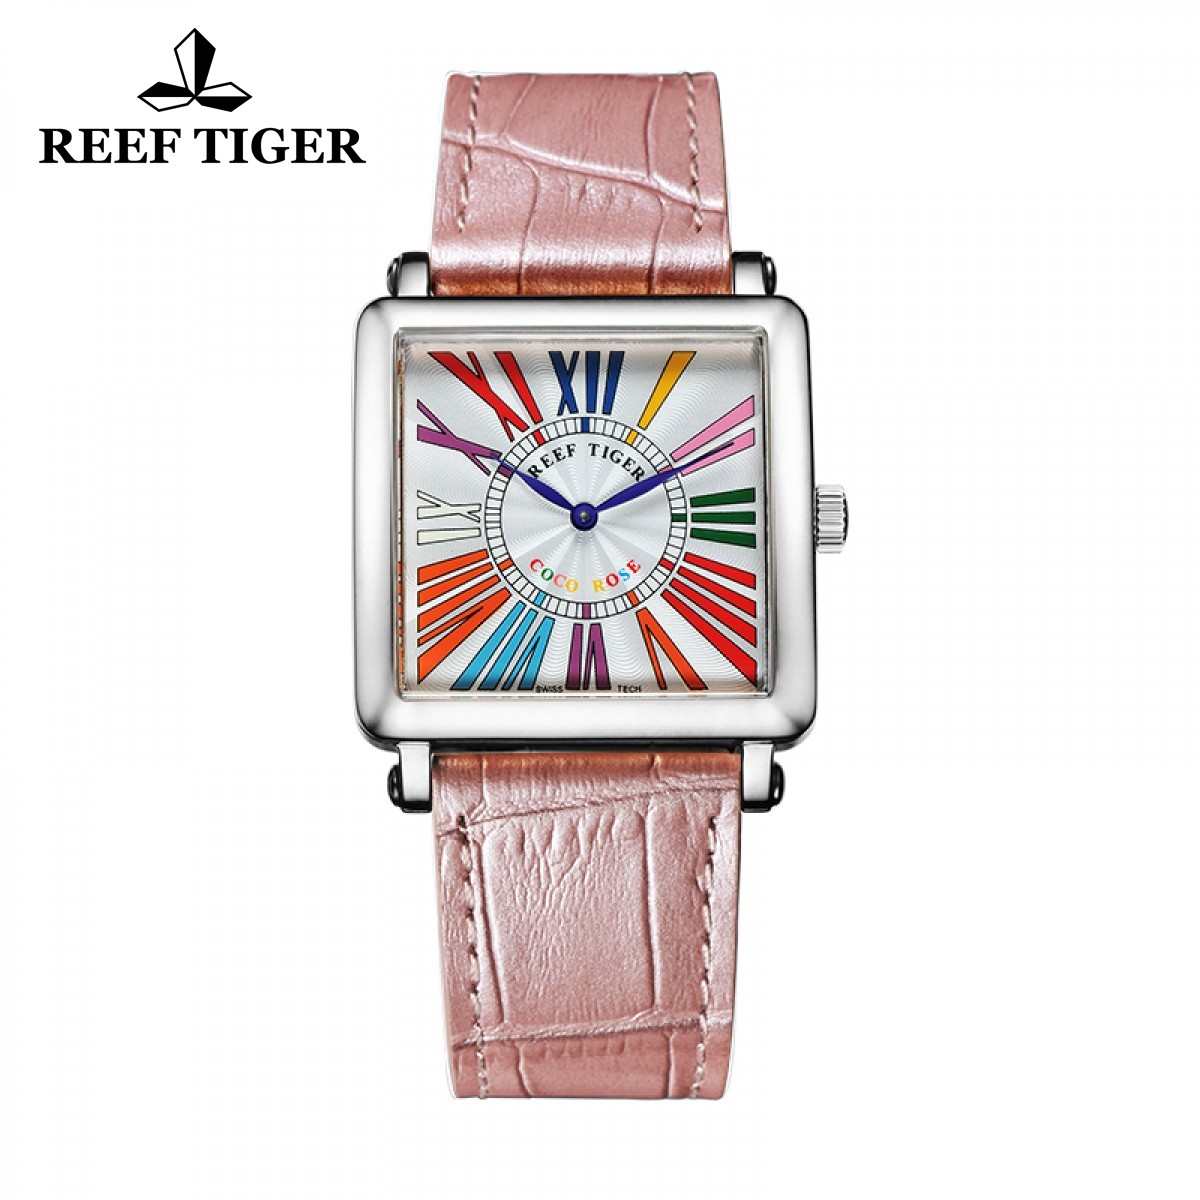 Reef Tiger Lady Fashion Watch Steel Case White Dial Square Watch RGA173-YWLR